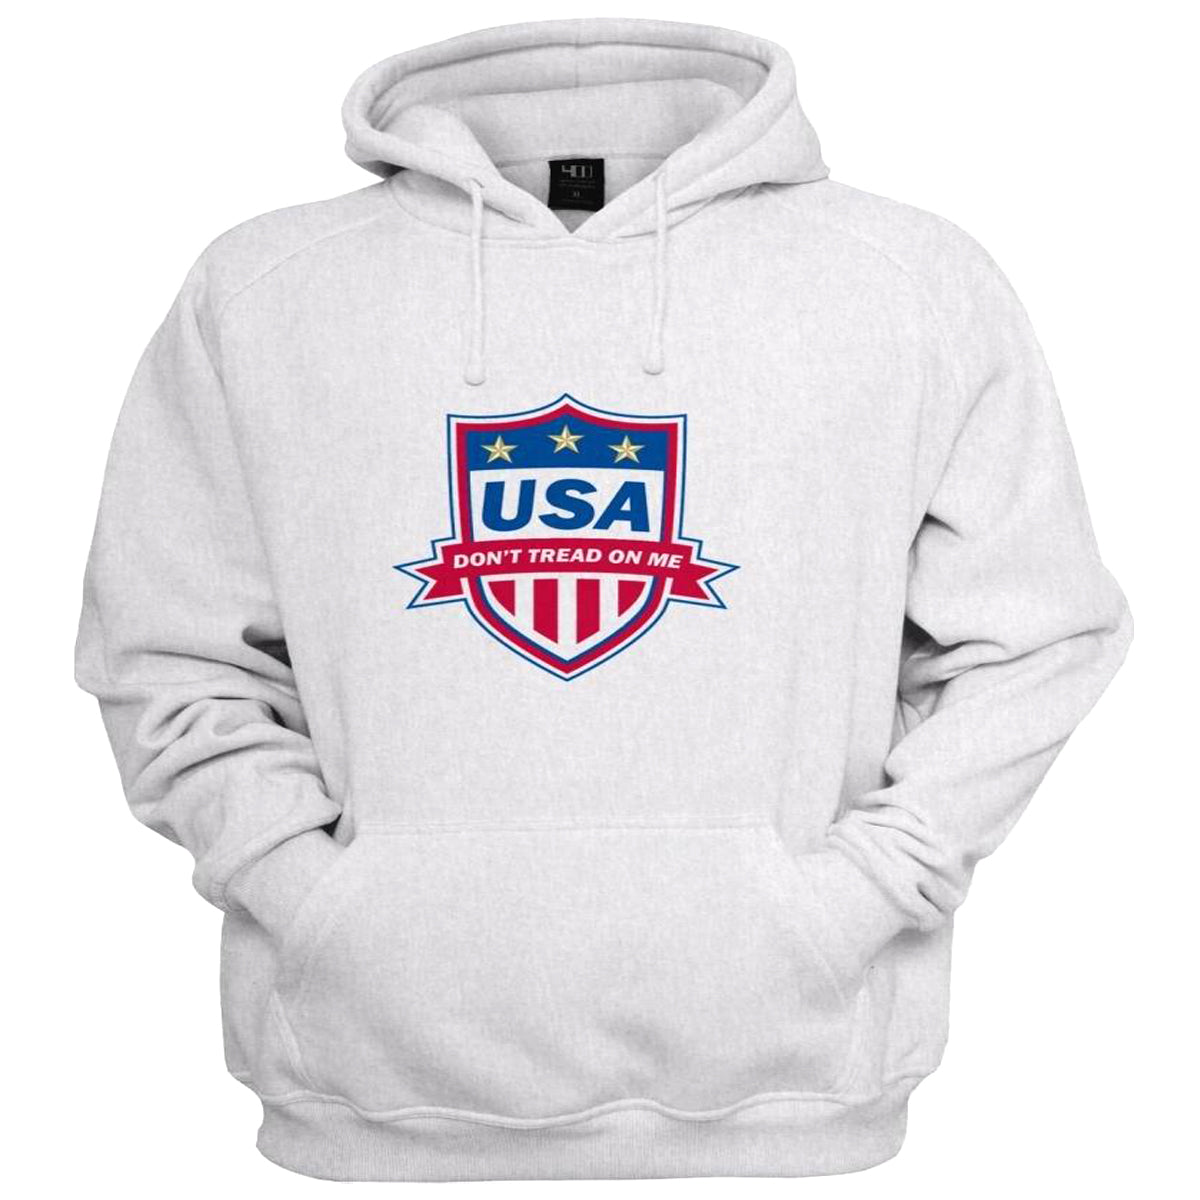 USA Don't Tread on Me Soccer Badge Printed Hooded Sweatshirt Hooded Sweatshirt 411 Adult Small Ash 